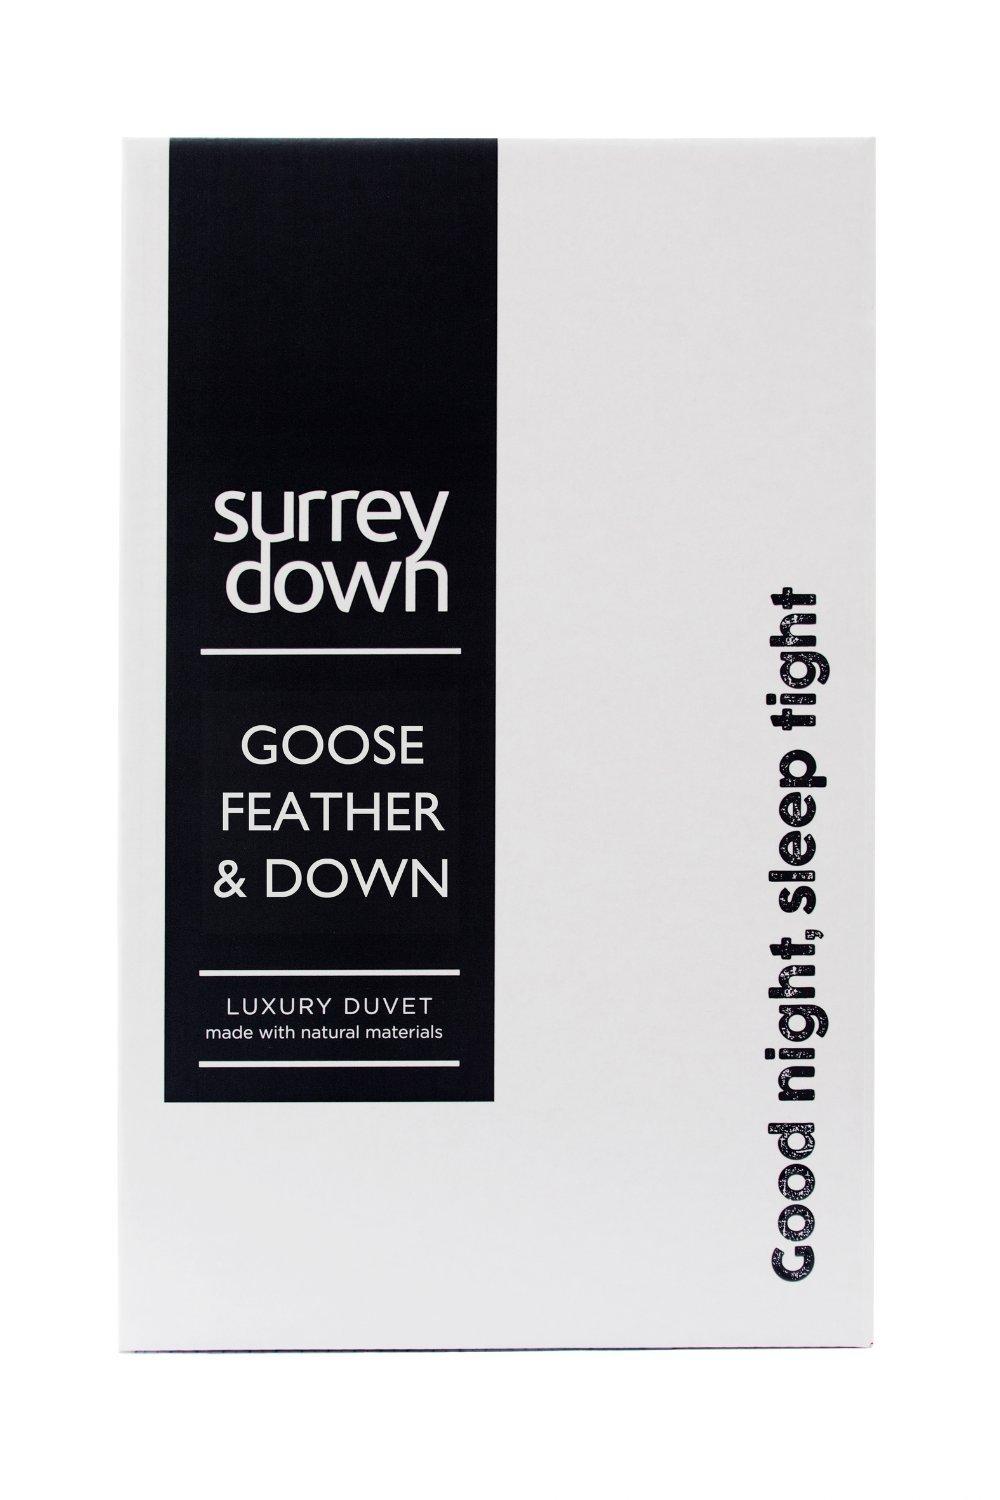 Goose Feather & Down 9tog Duvet